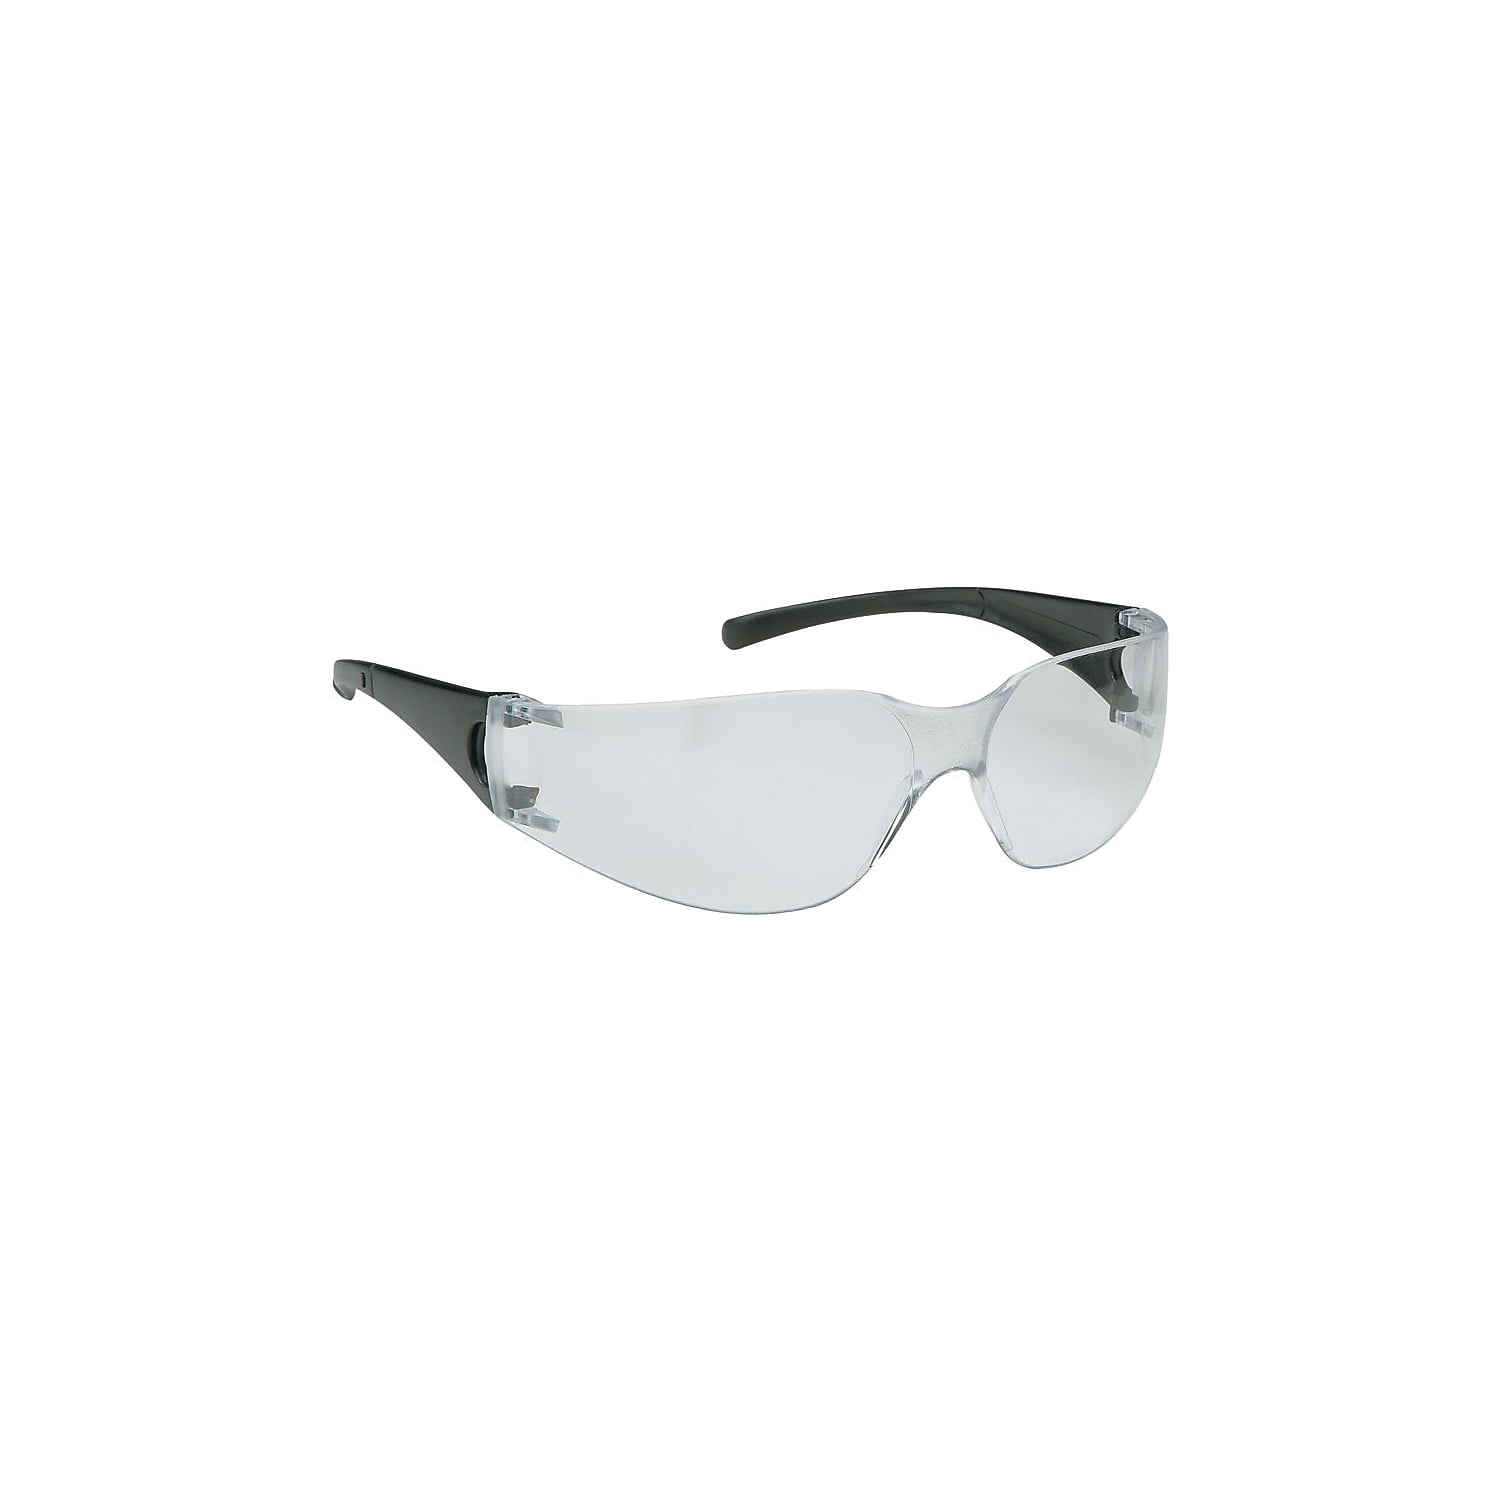 Kimberly-Clark Safety Eyewear Jackson V30 Nemesis W/ Neck Cord 12/CT CL 25679 